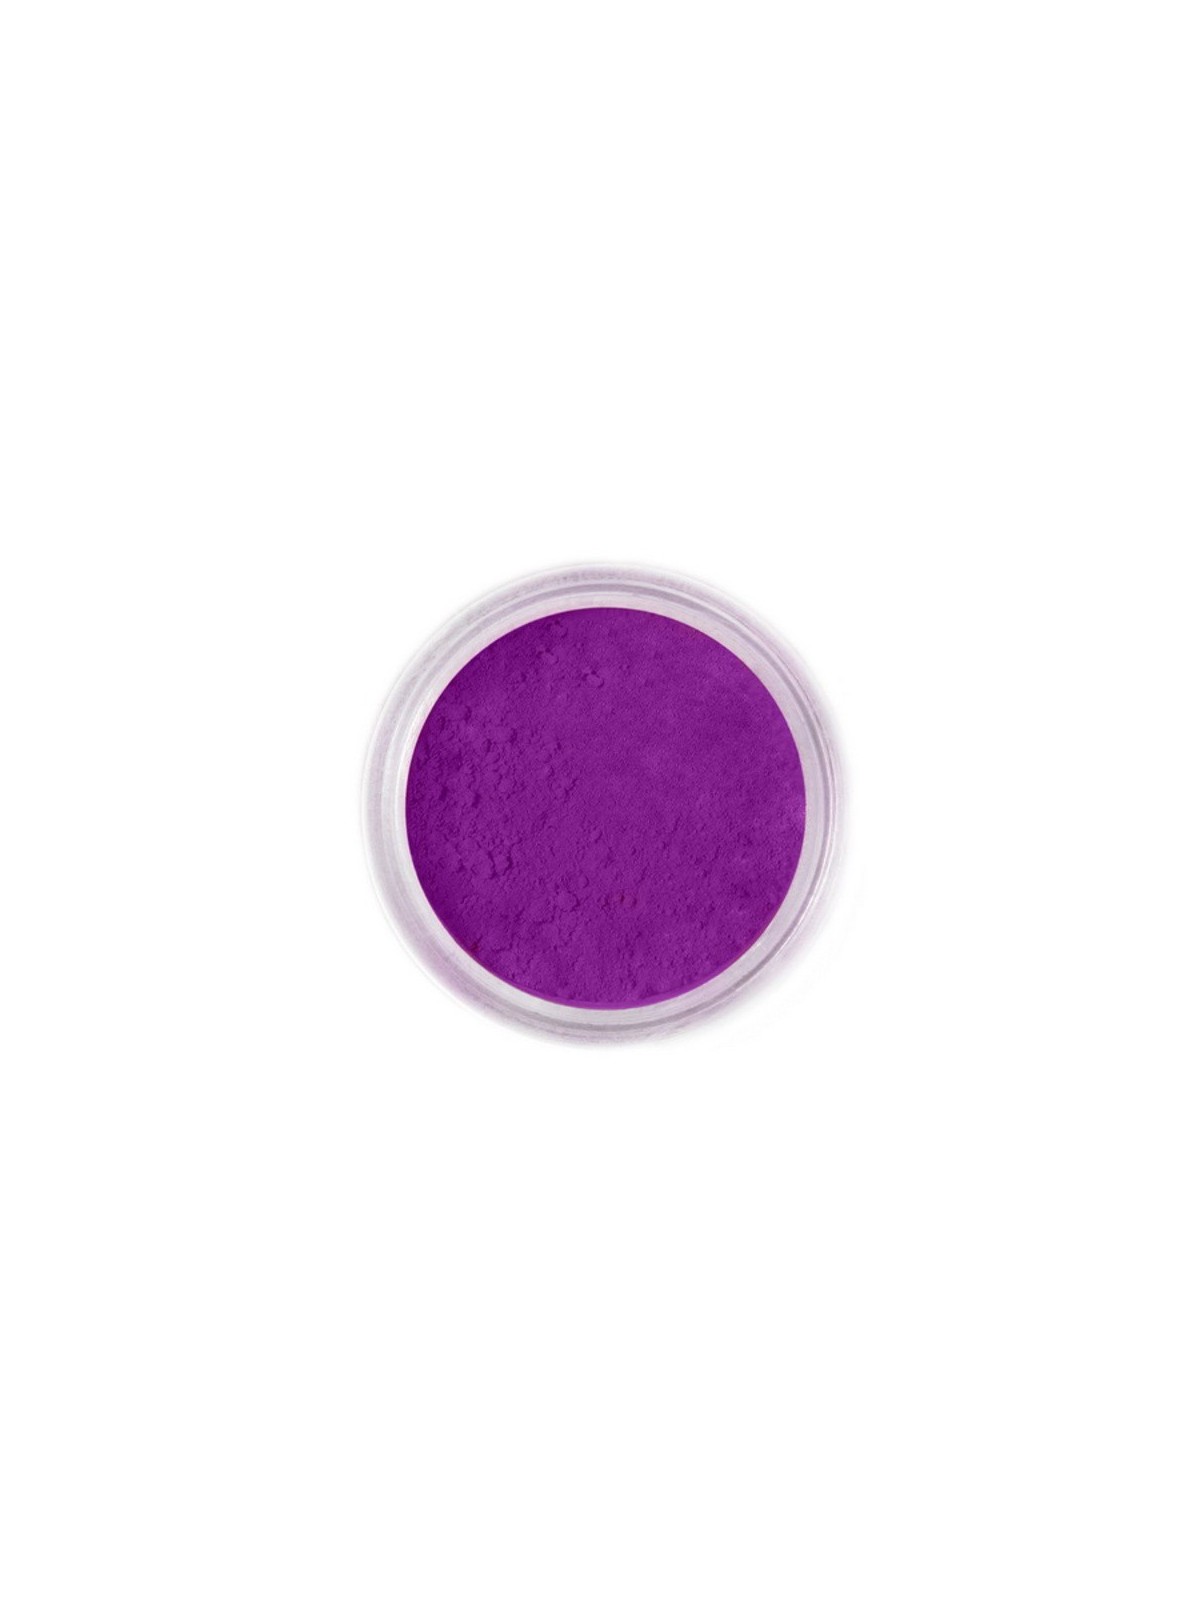 Dekorative Puderfarbe Fractal - Viola (1,5 g)